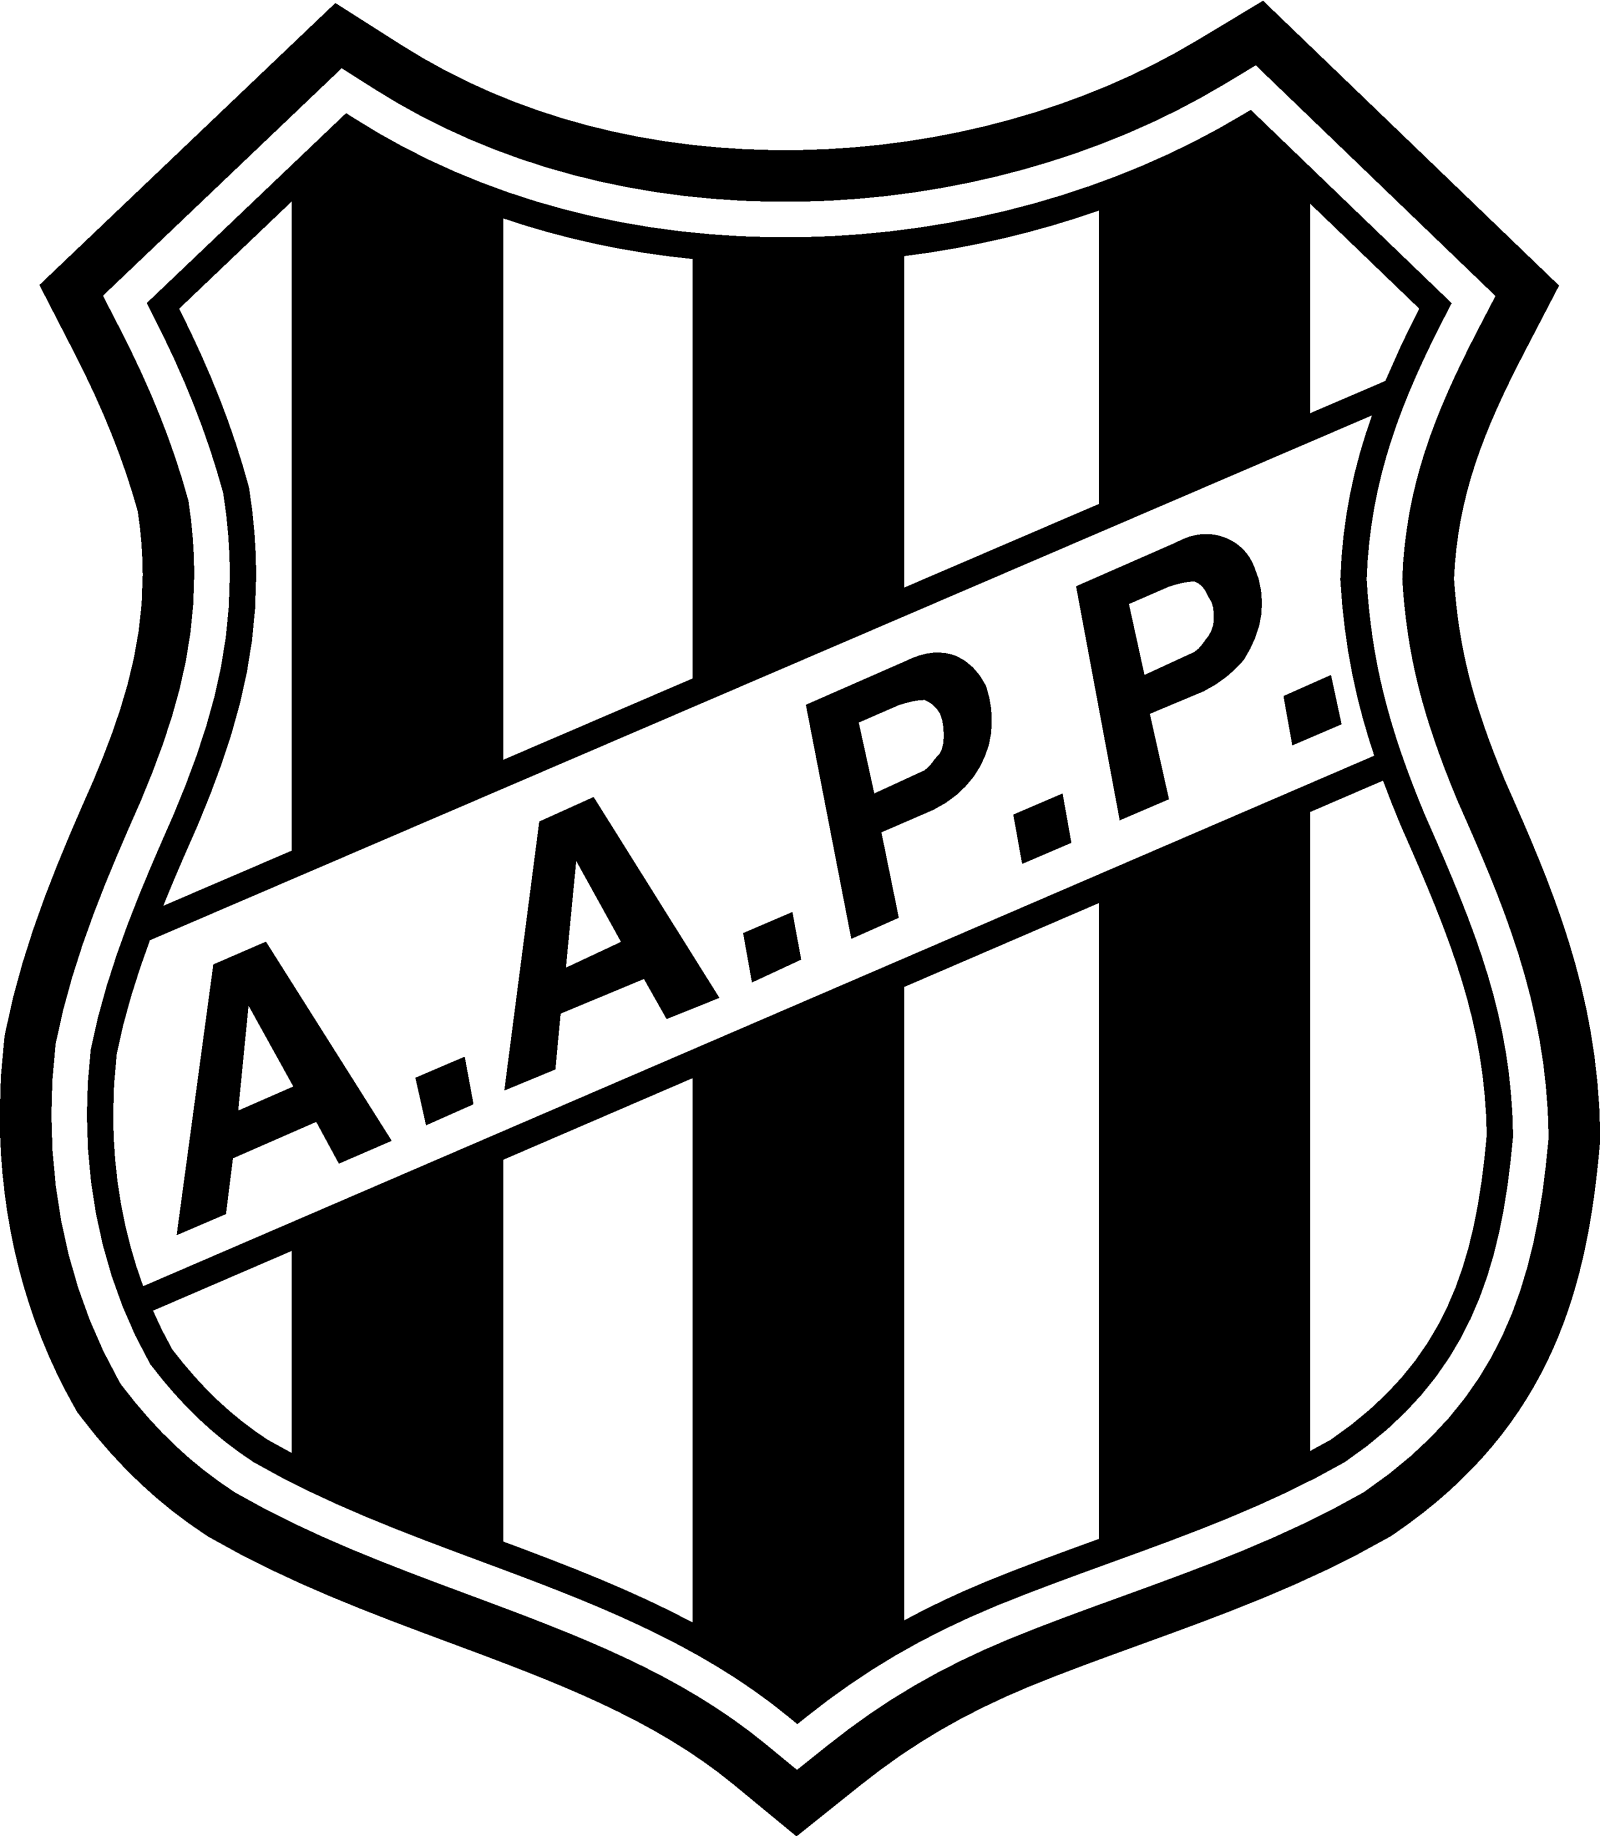 Campeonato Brasileiro Série A - Wikipedia